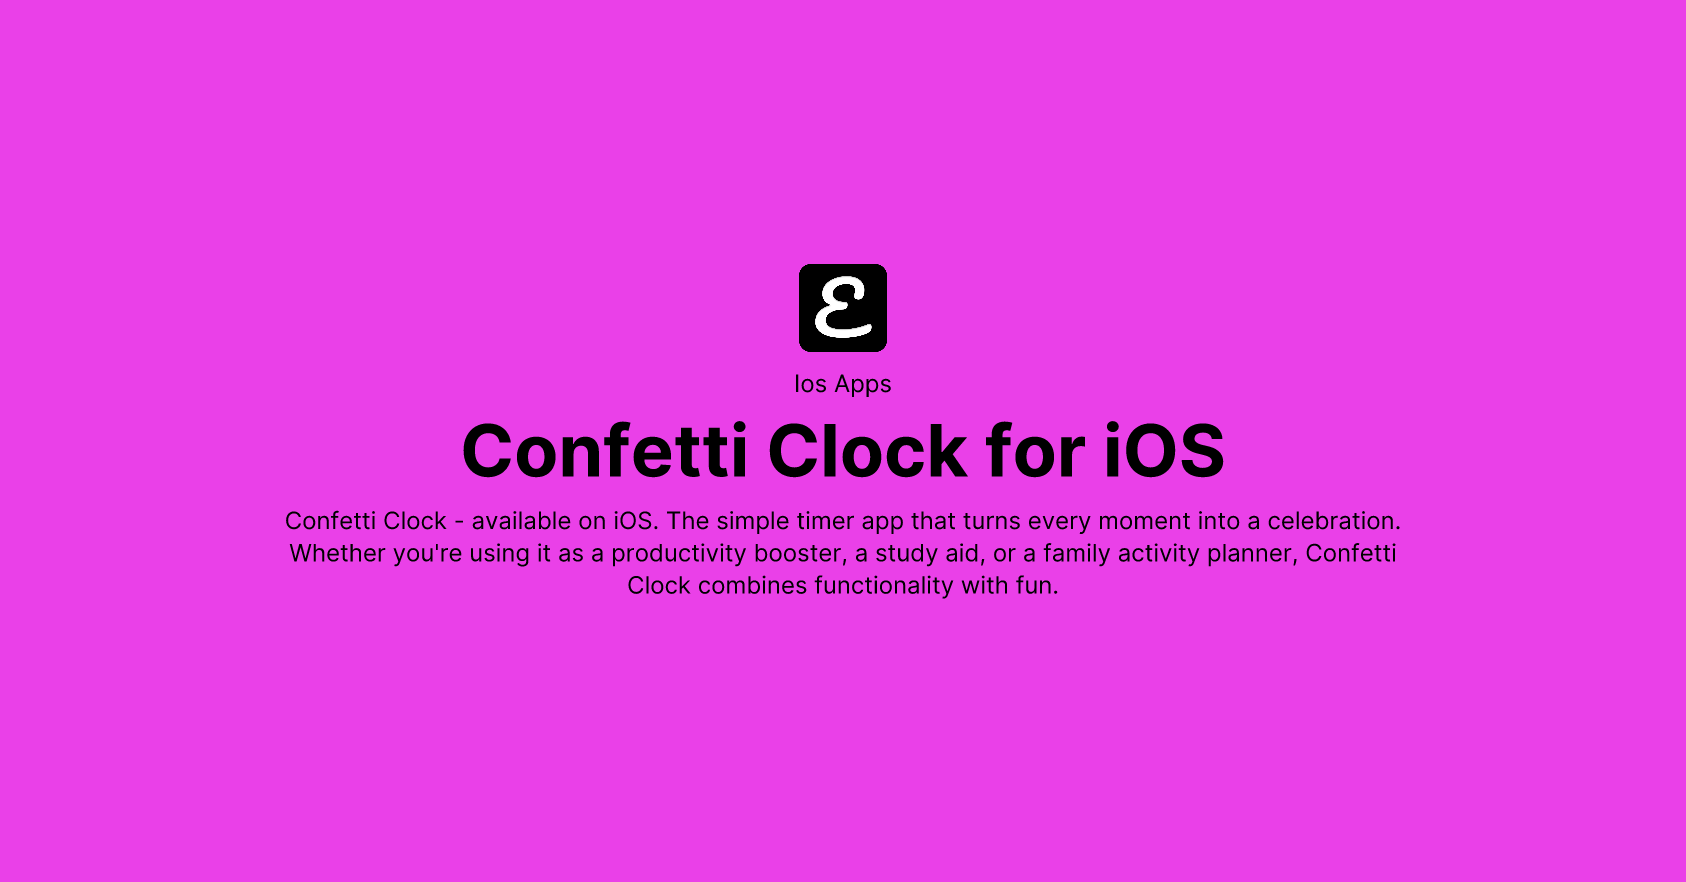 Confetti Clock for iOS by Eric David Smith